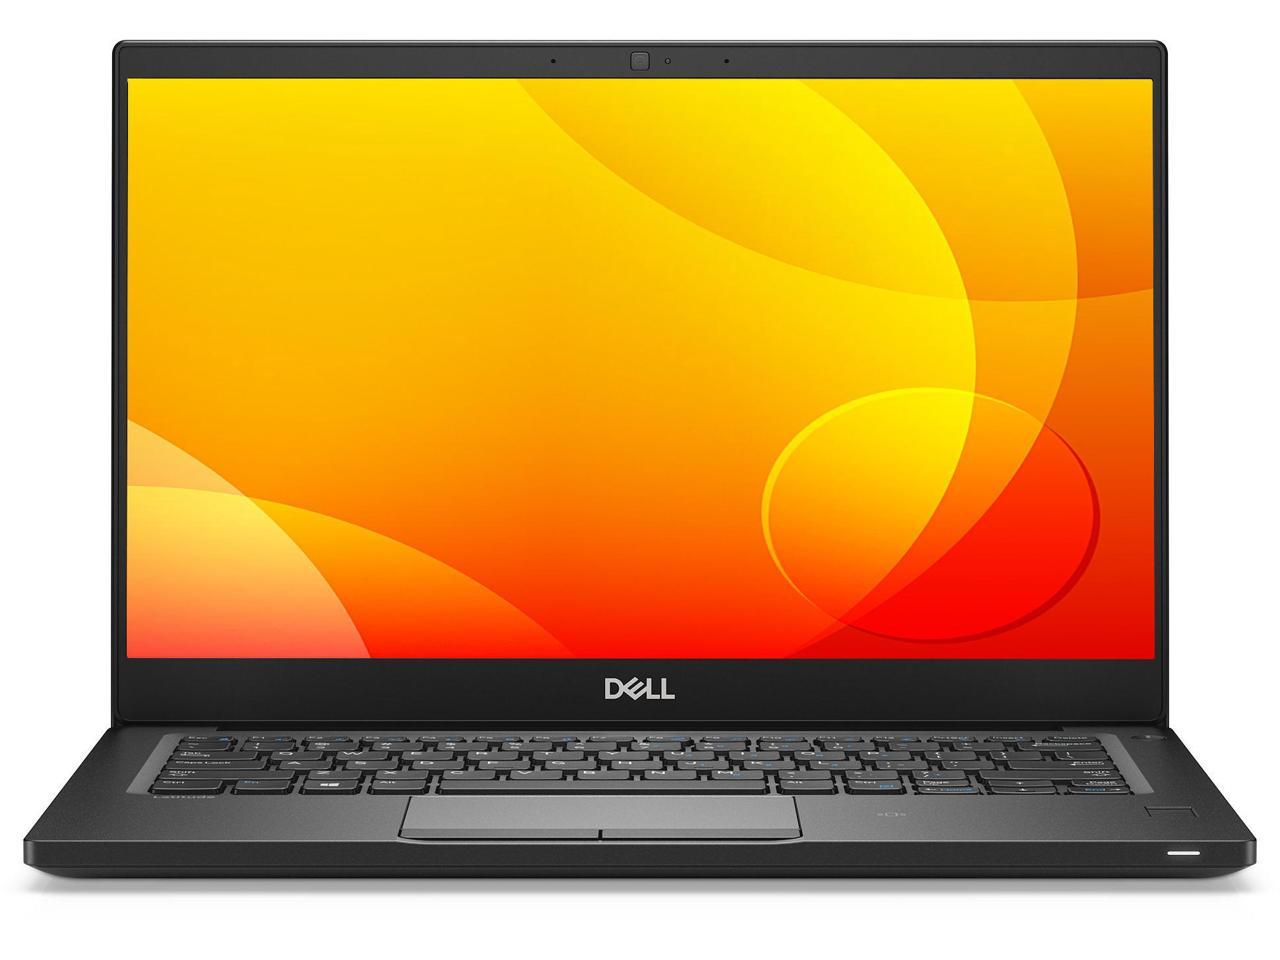 EPower DELL Latitude 7390,7th Gen, Windows 10 Professional LCD, Laptop (Renewed)